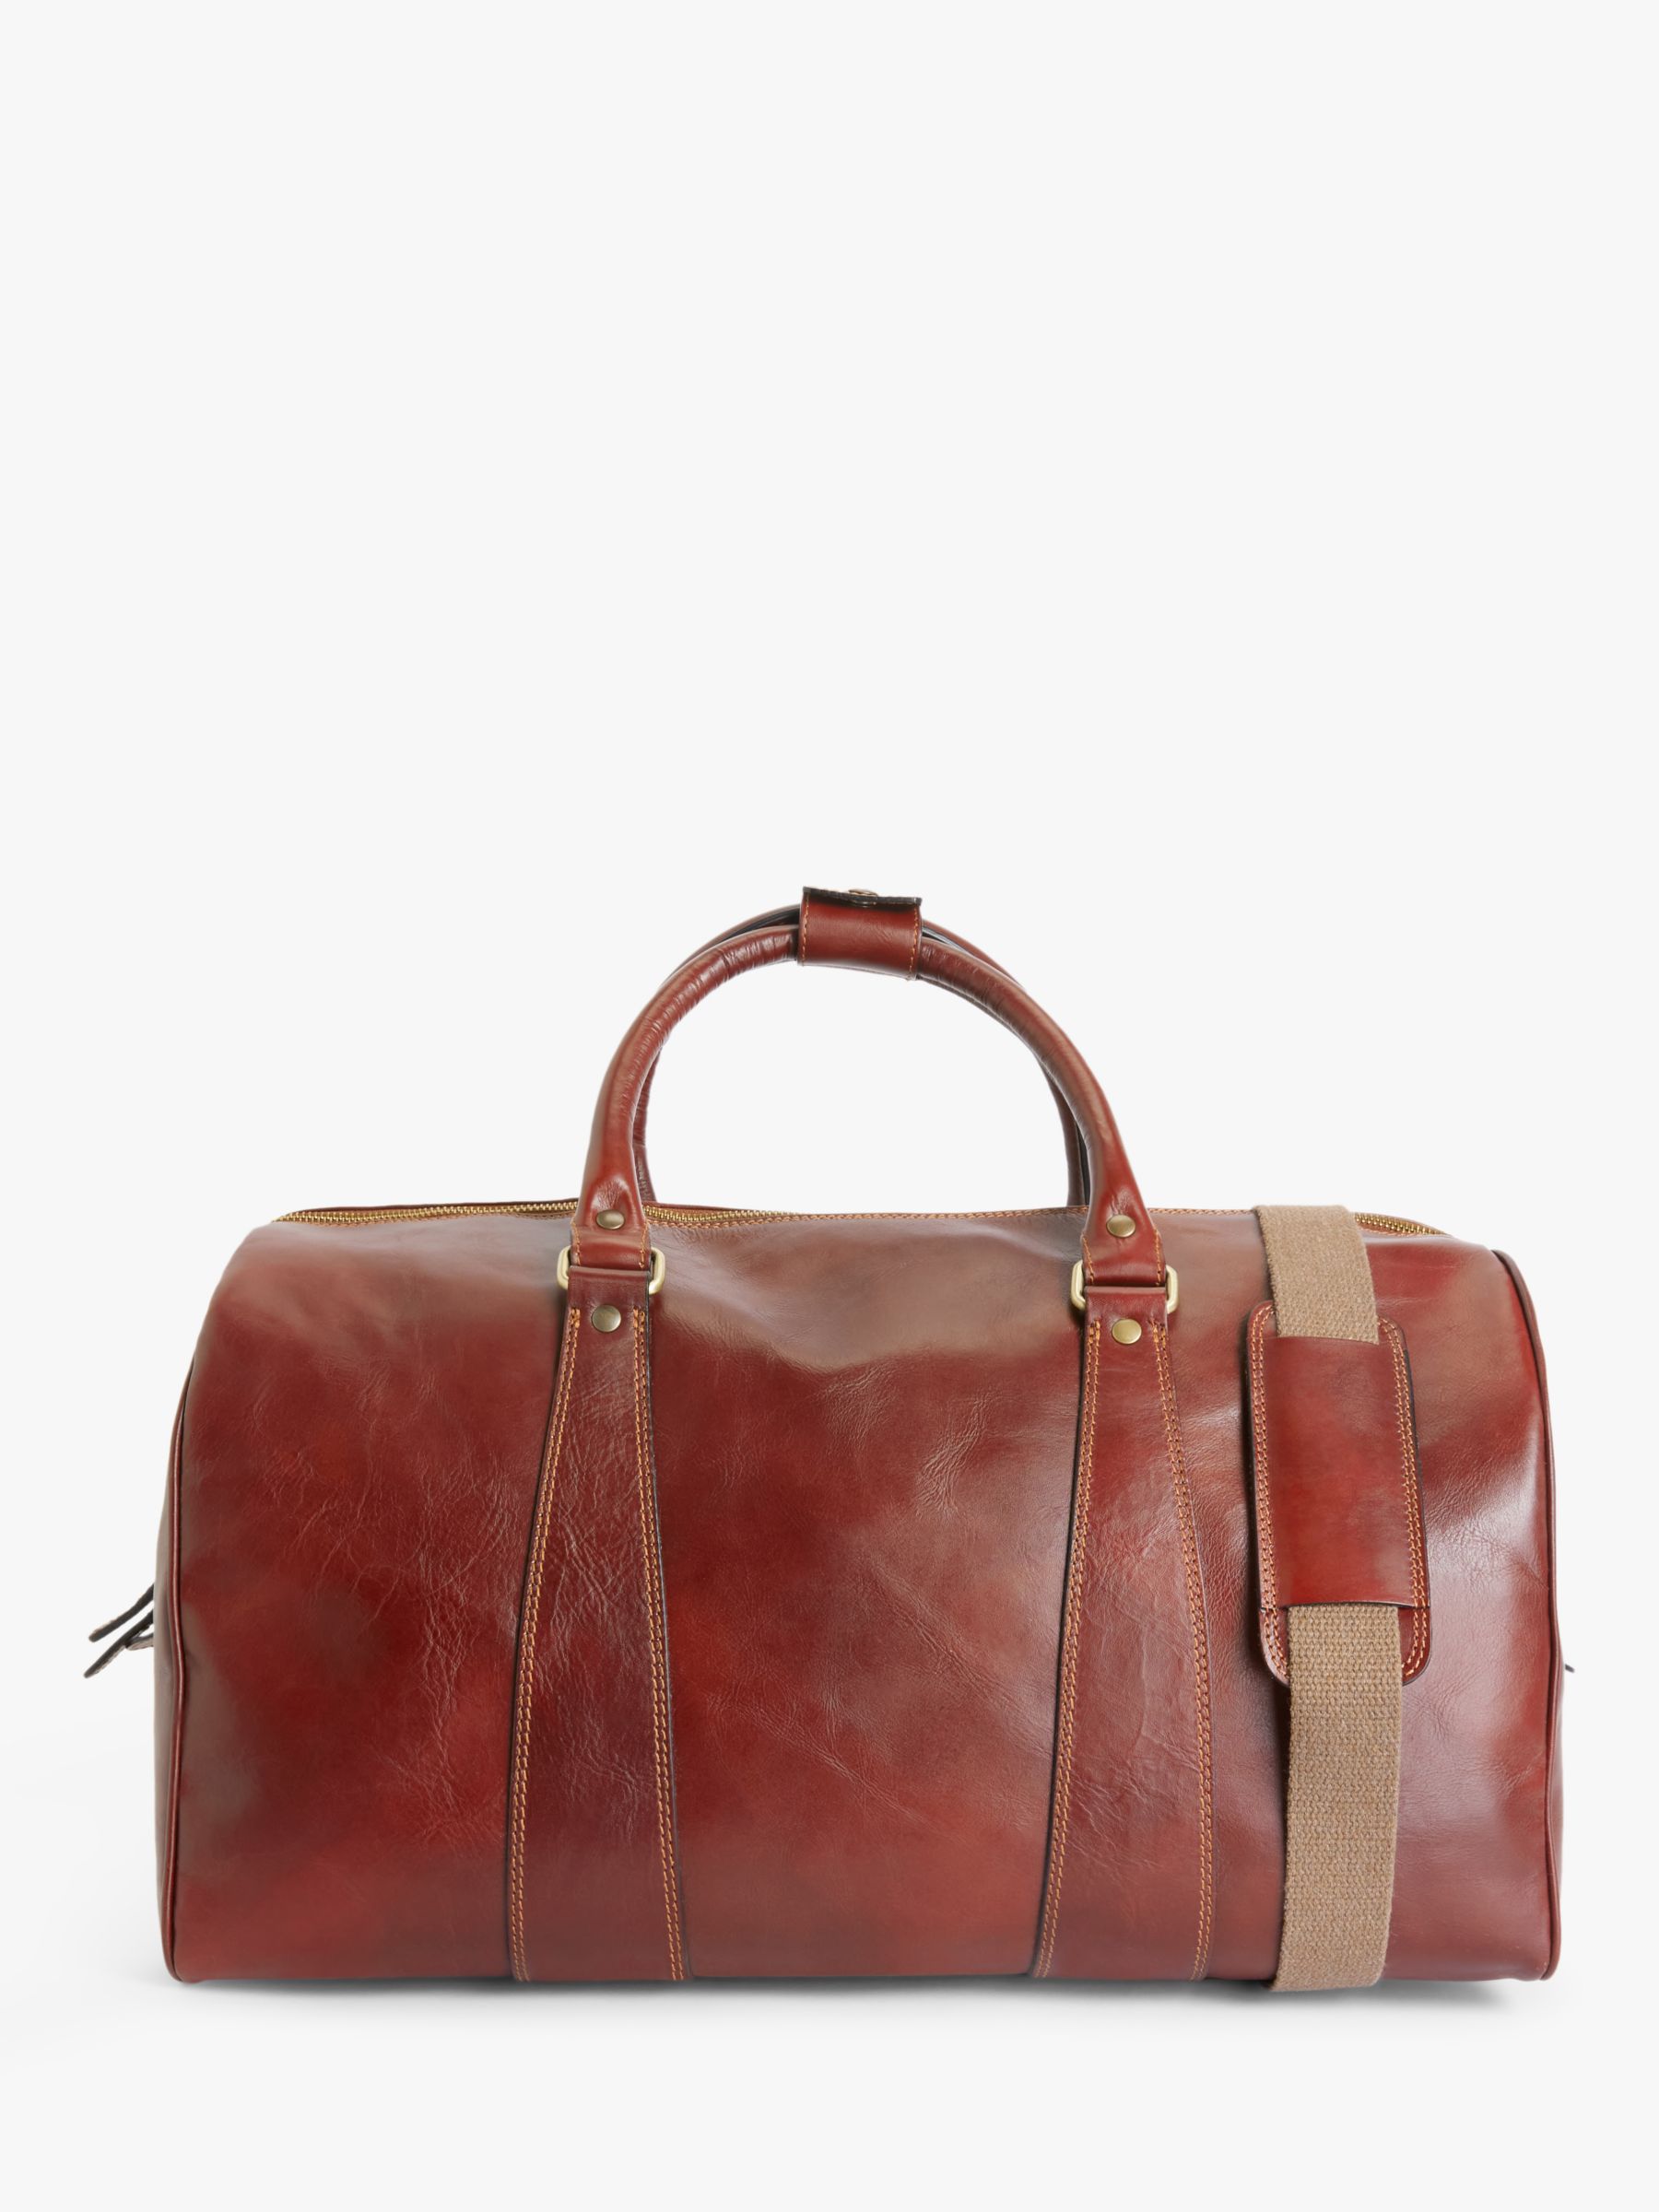 John Lewis Made in Italy Leather Messenger 2 Bag, Brown at John